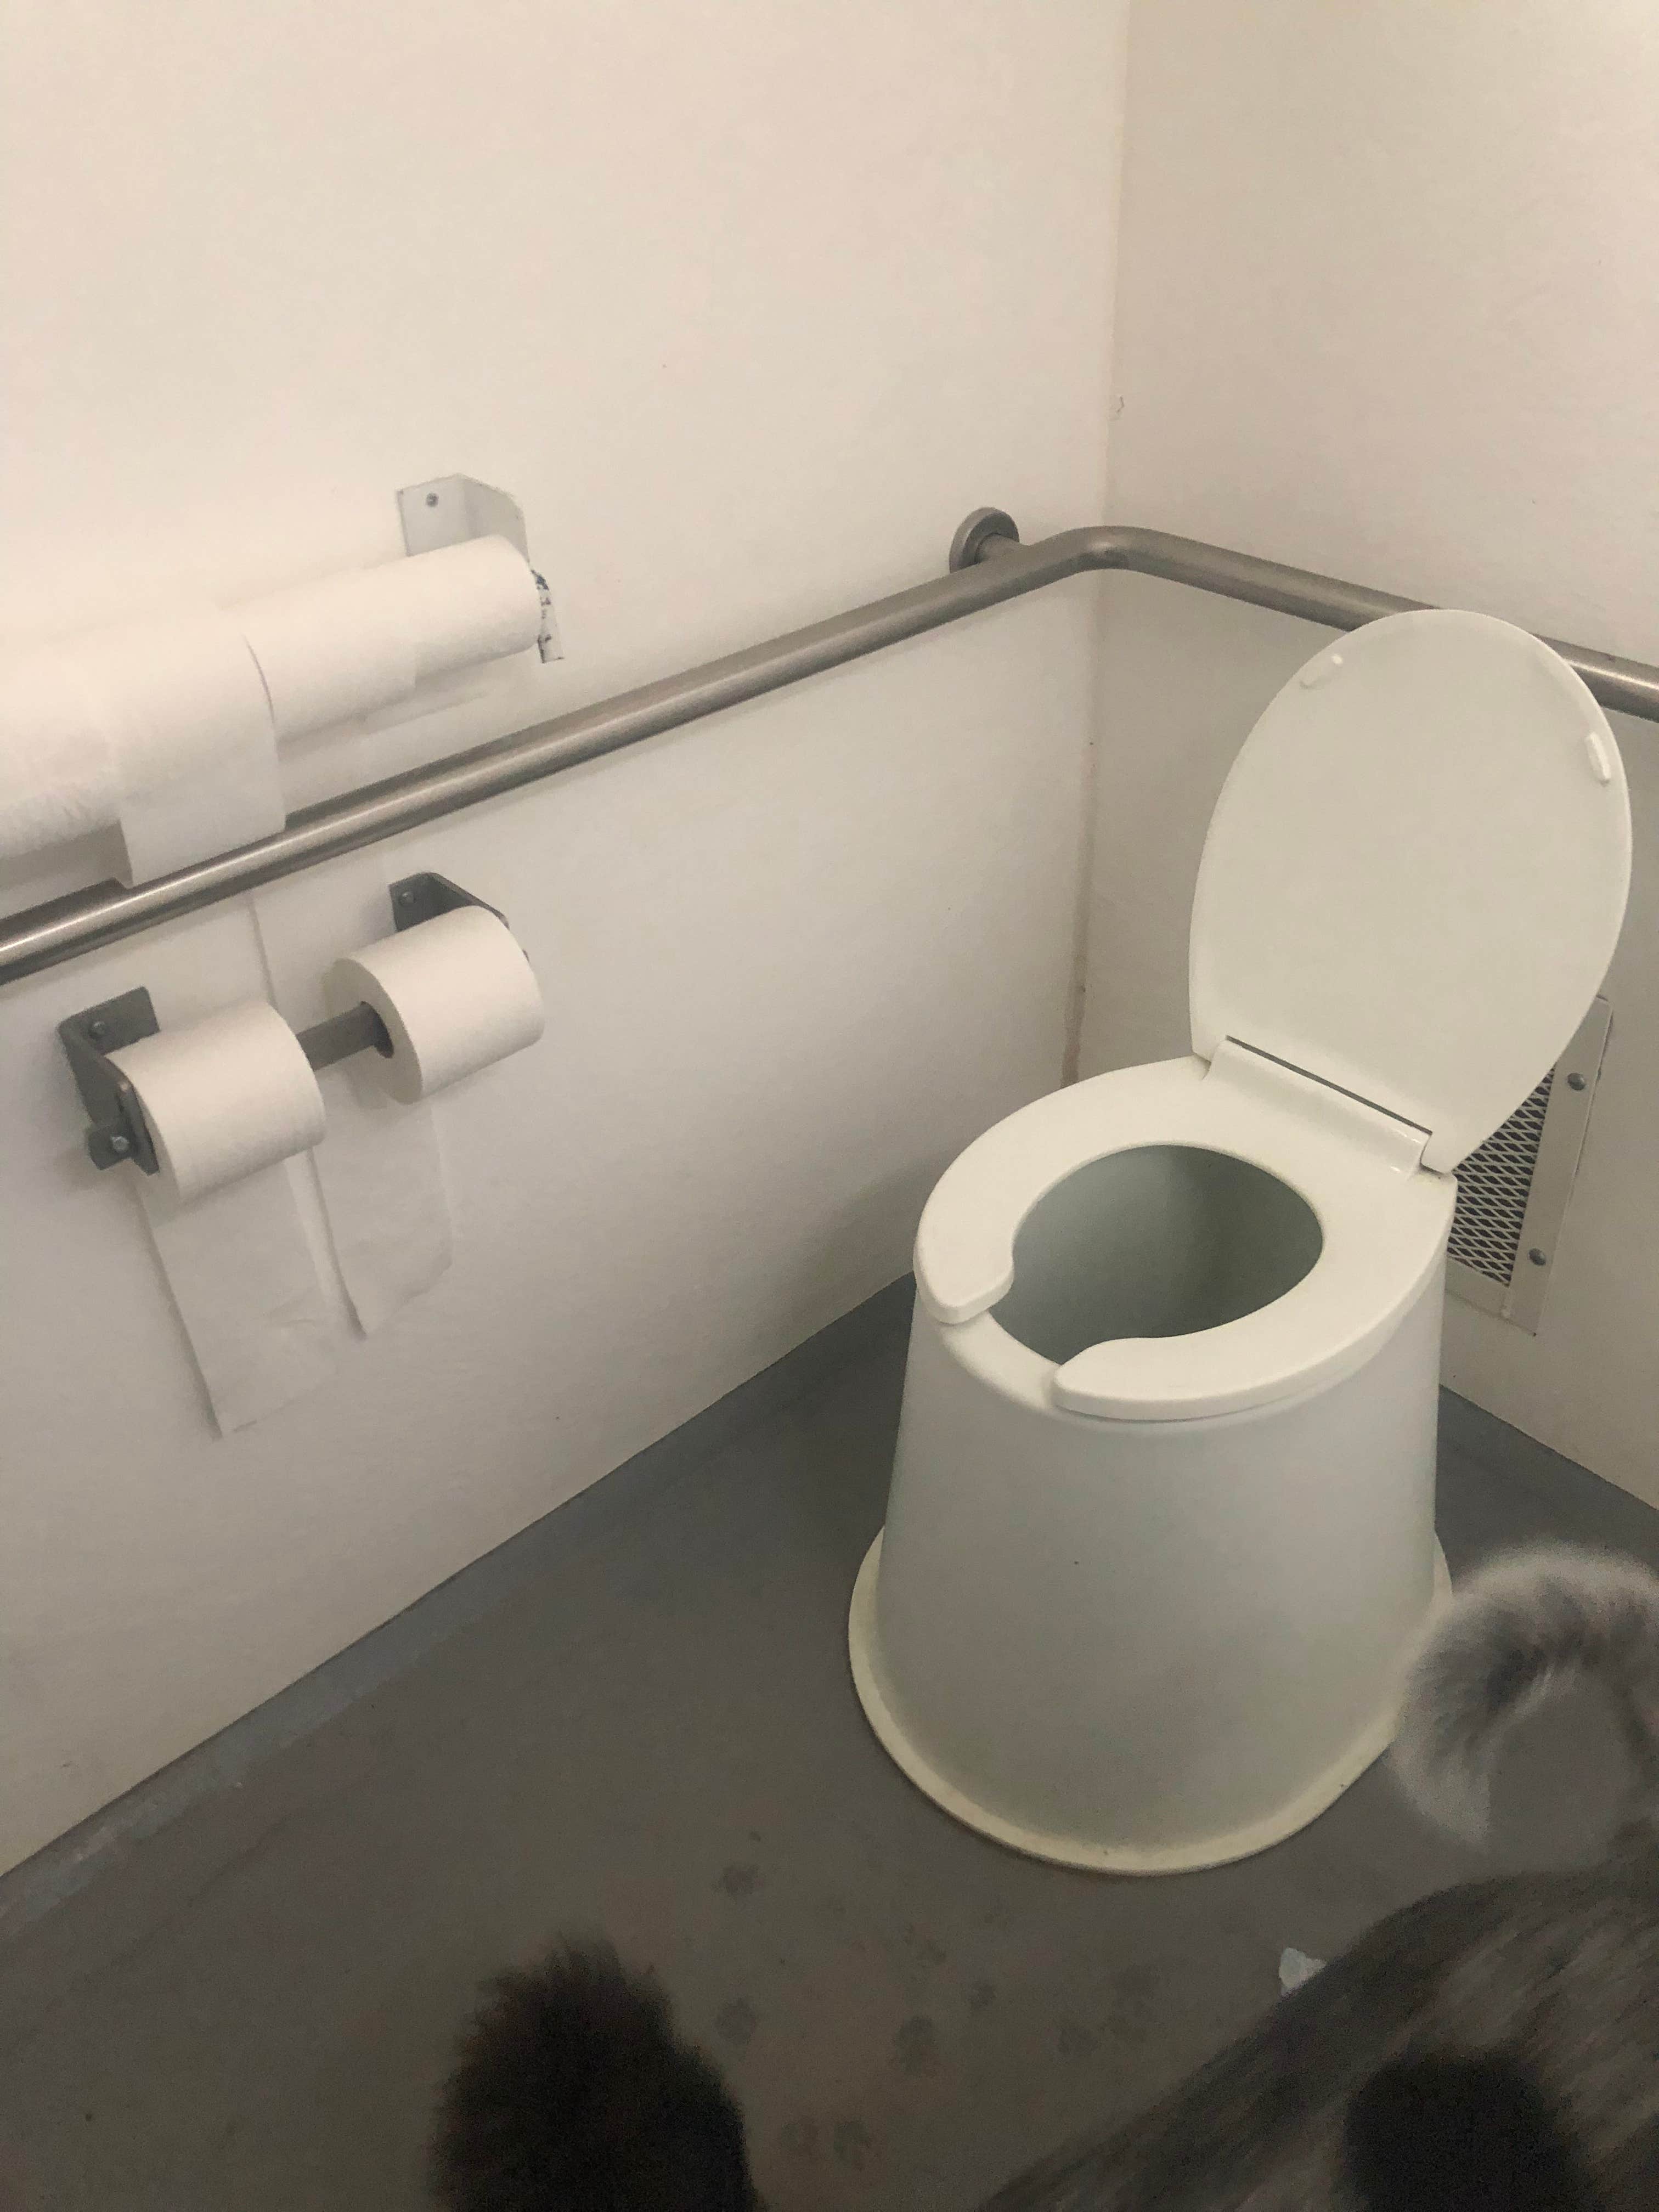 Pit toilets